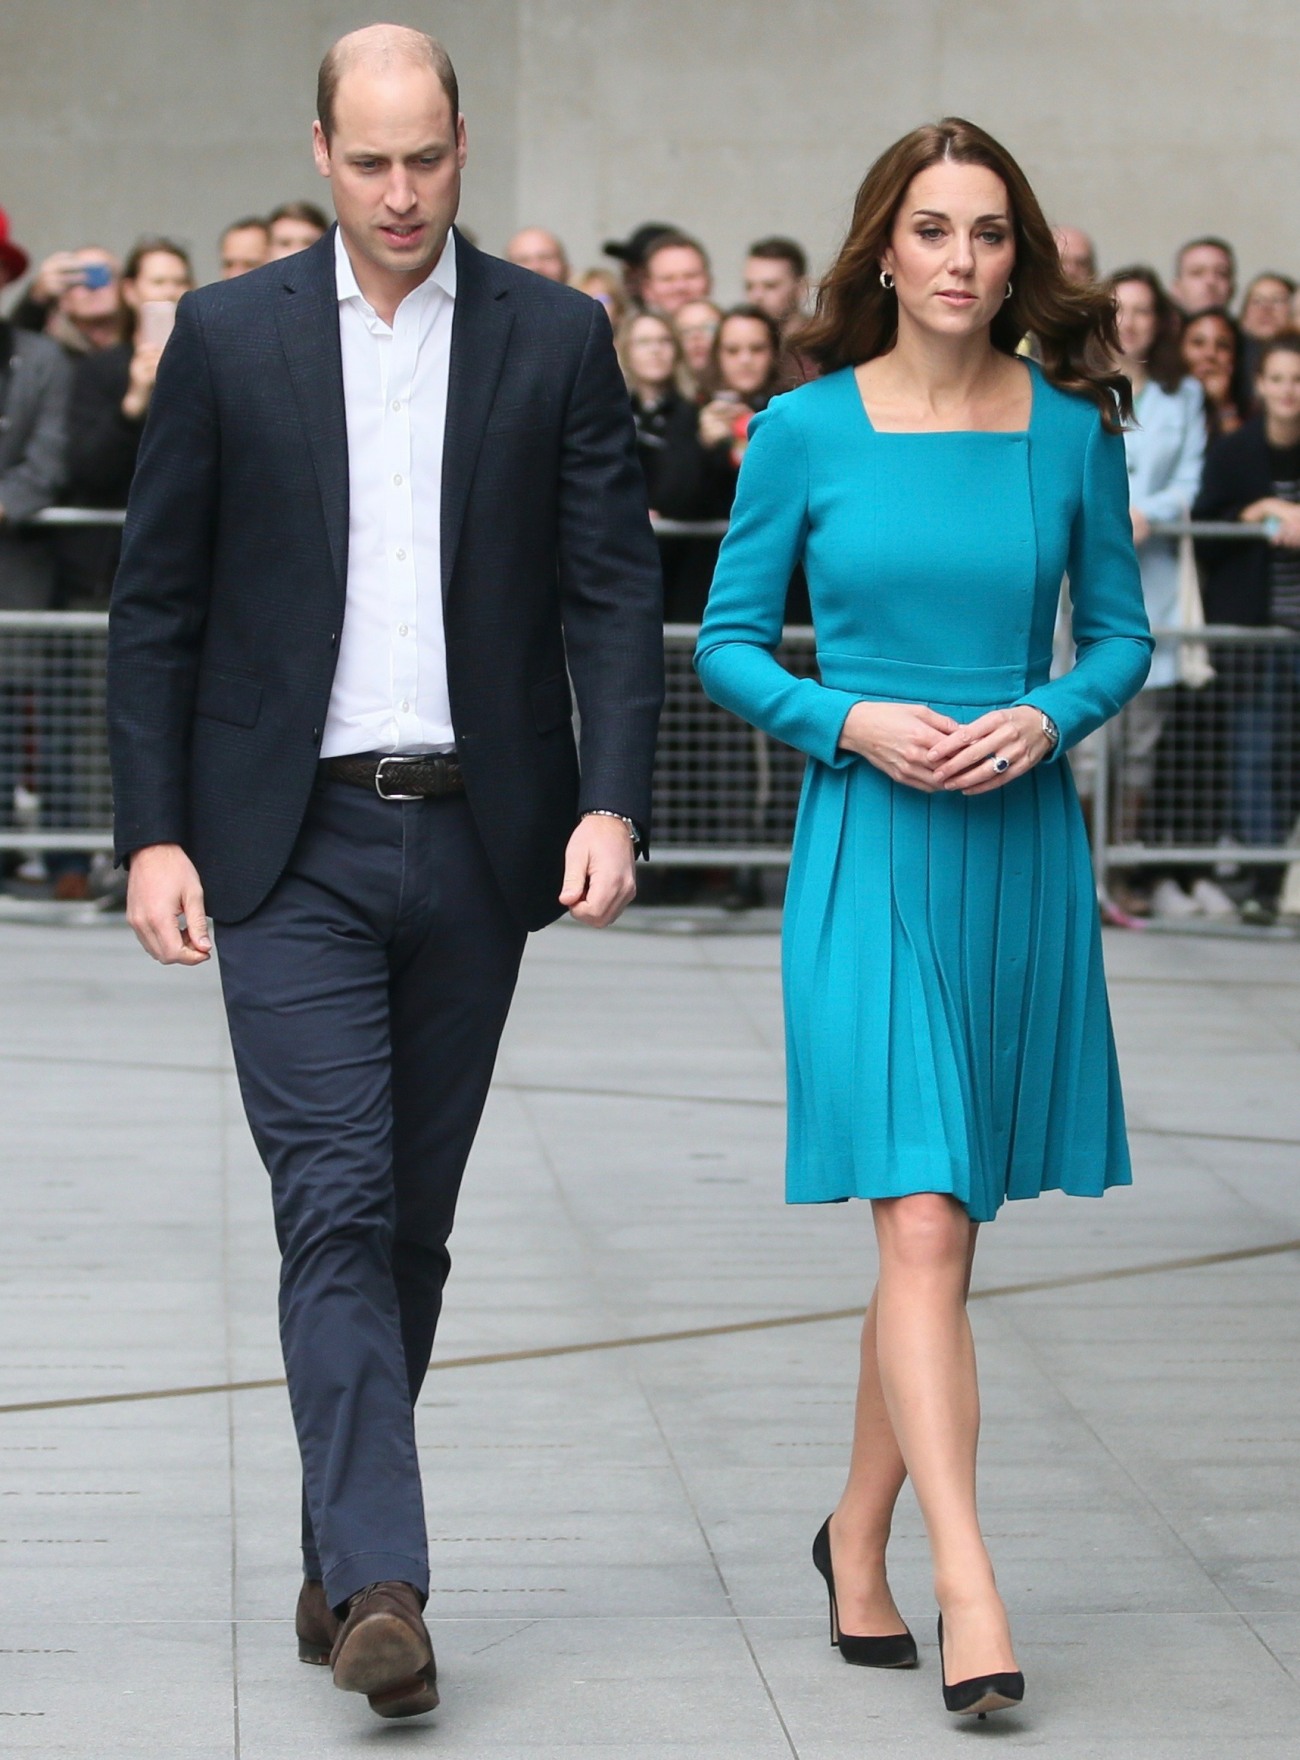 The Duke and Duchess of Cambridge visit the BBC